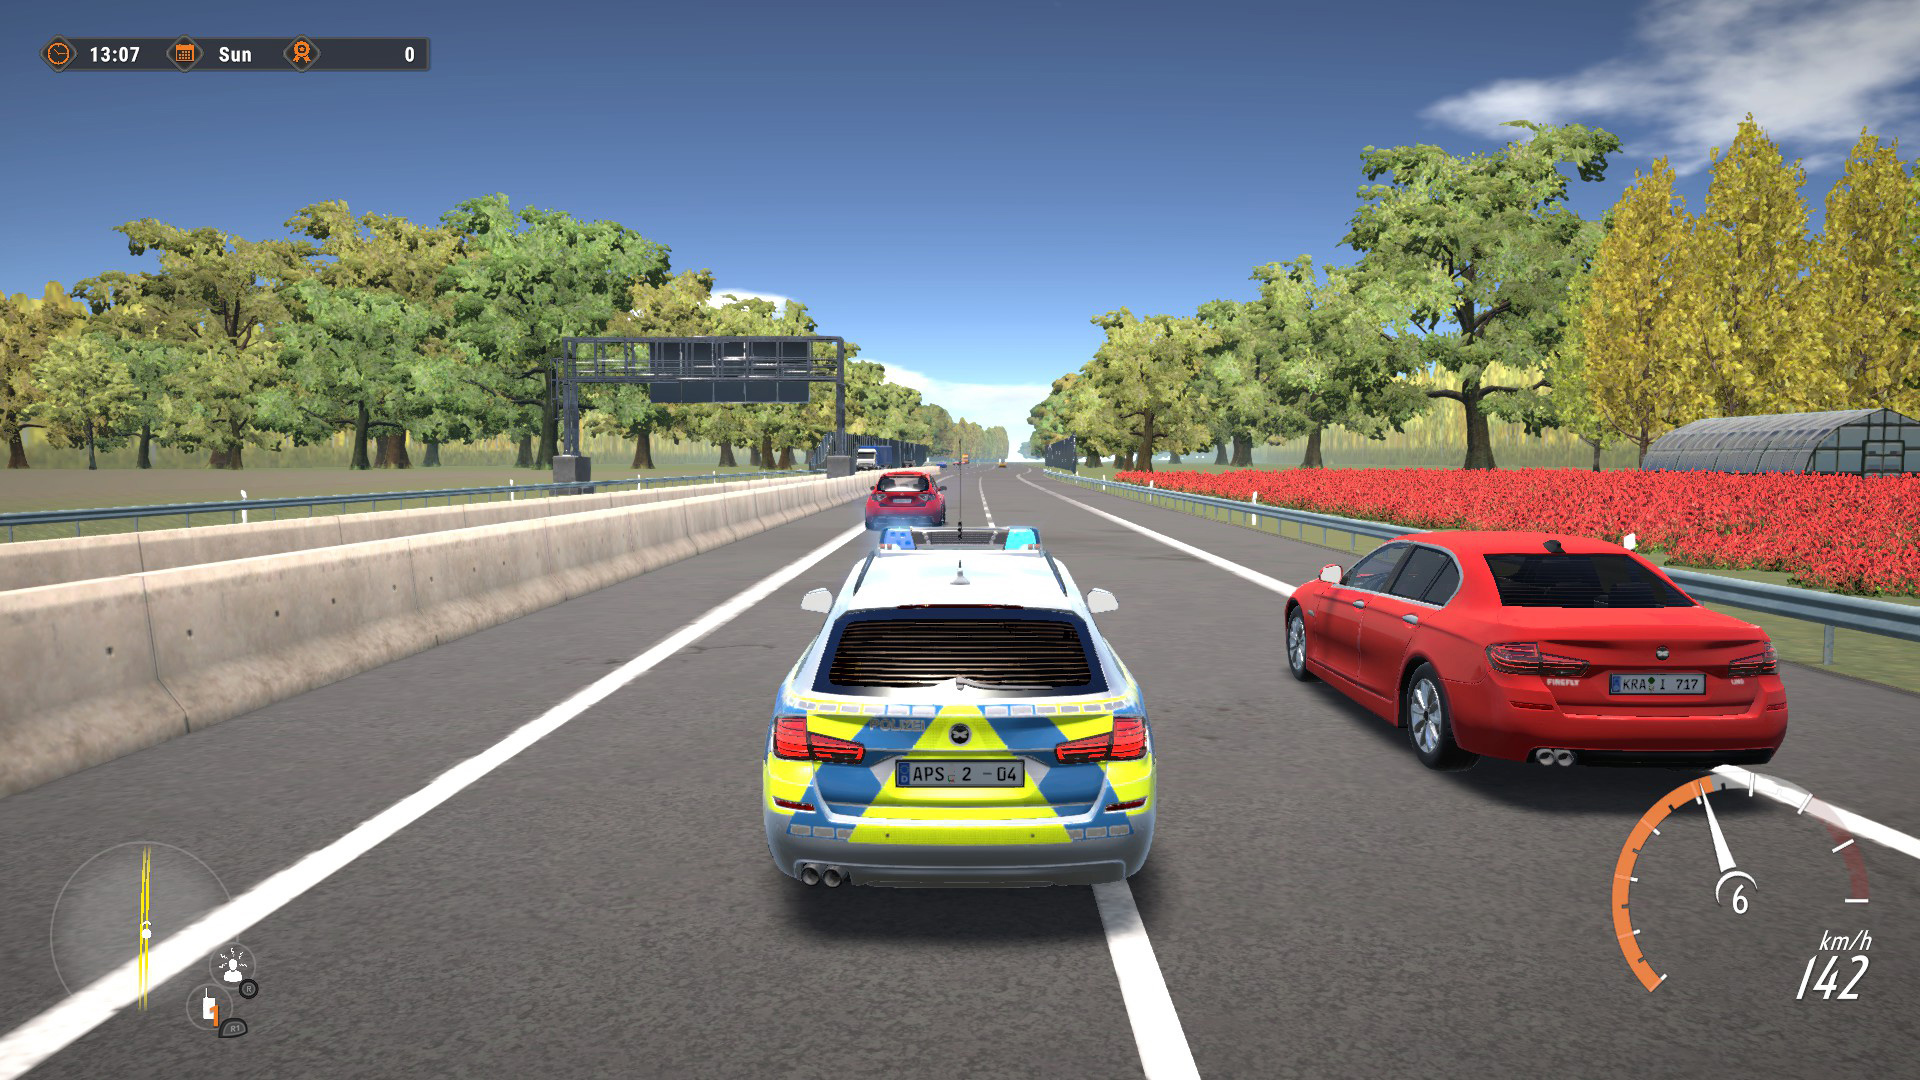 autobahn police simulator 2 free